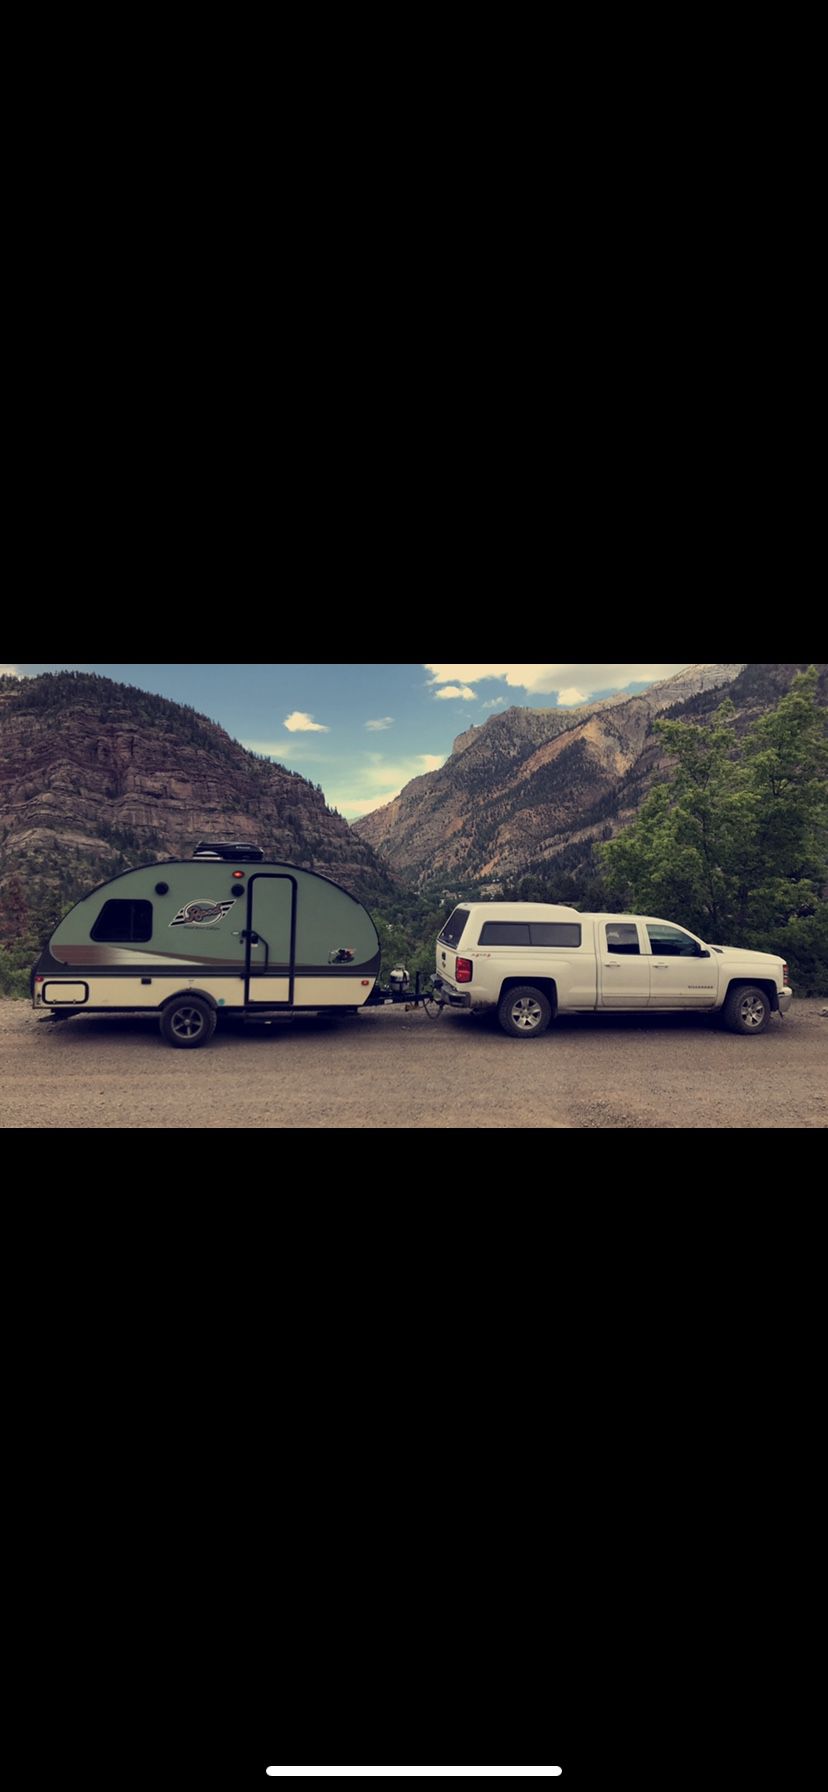 Rpod 176 Camper travel trailer - hood river edition